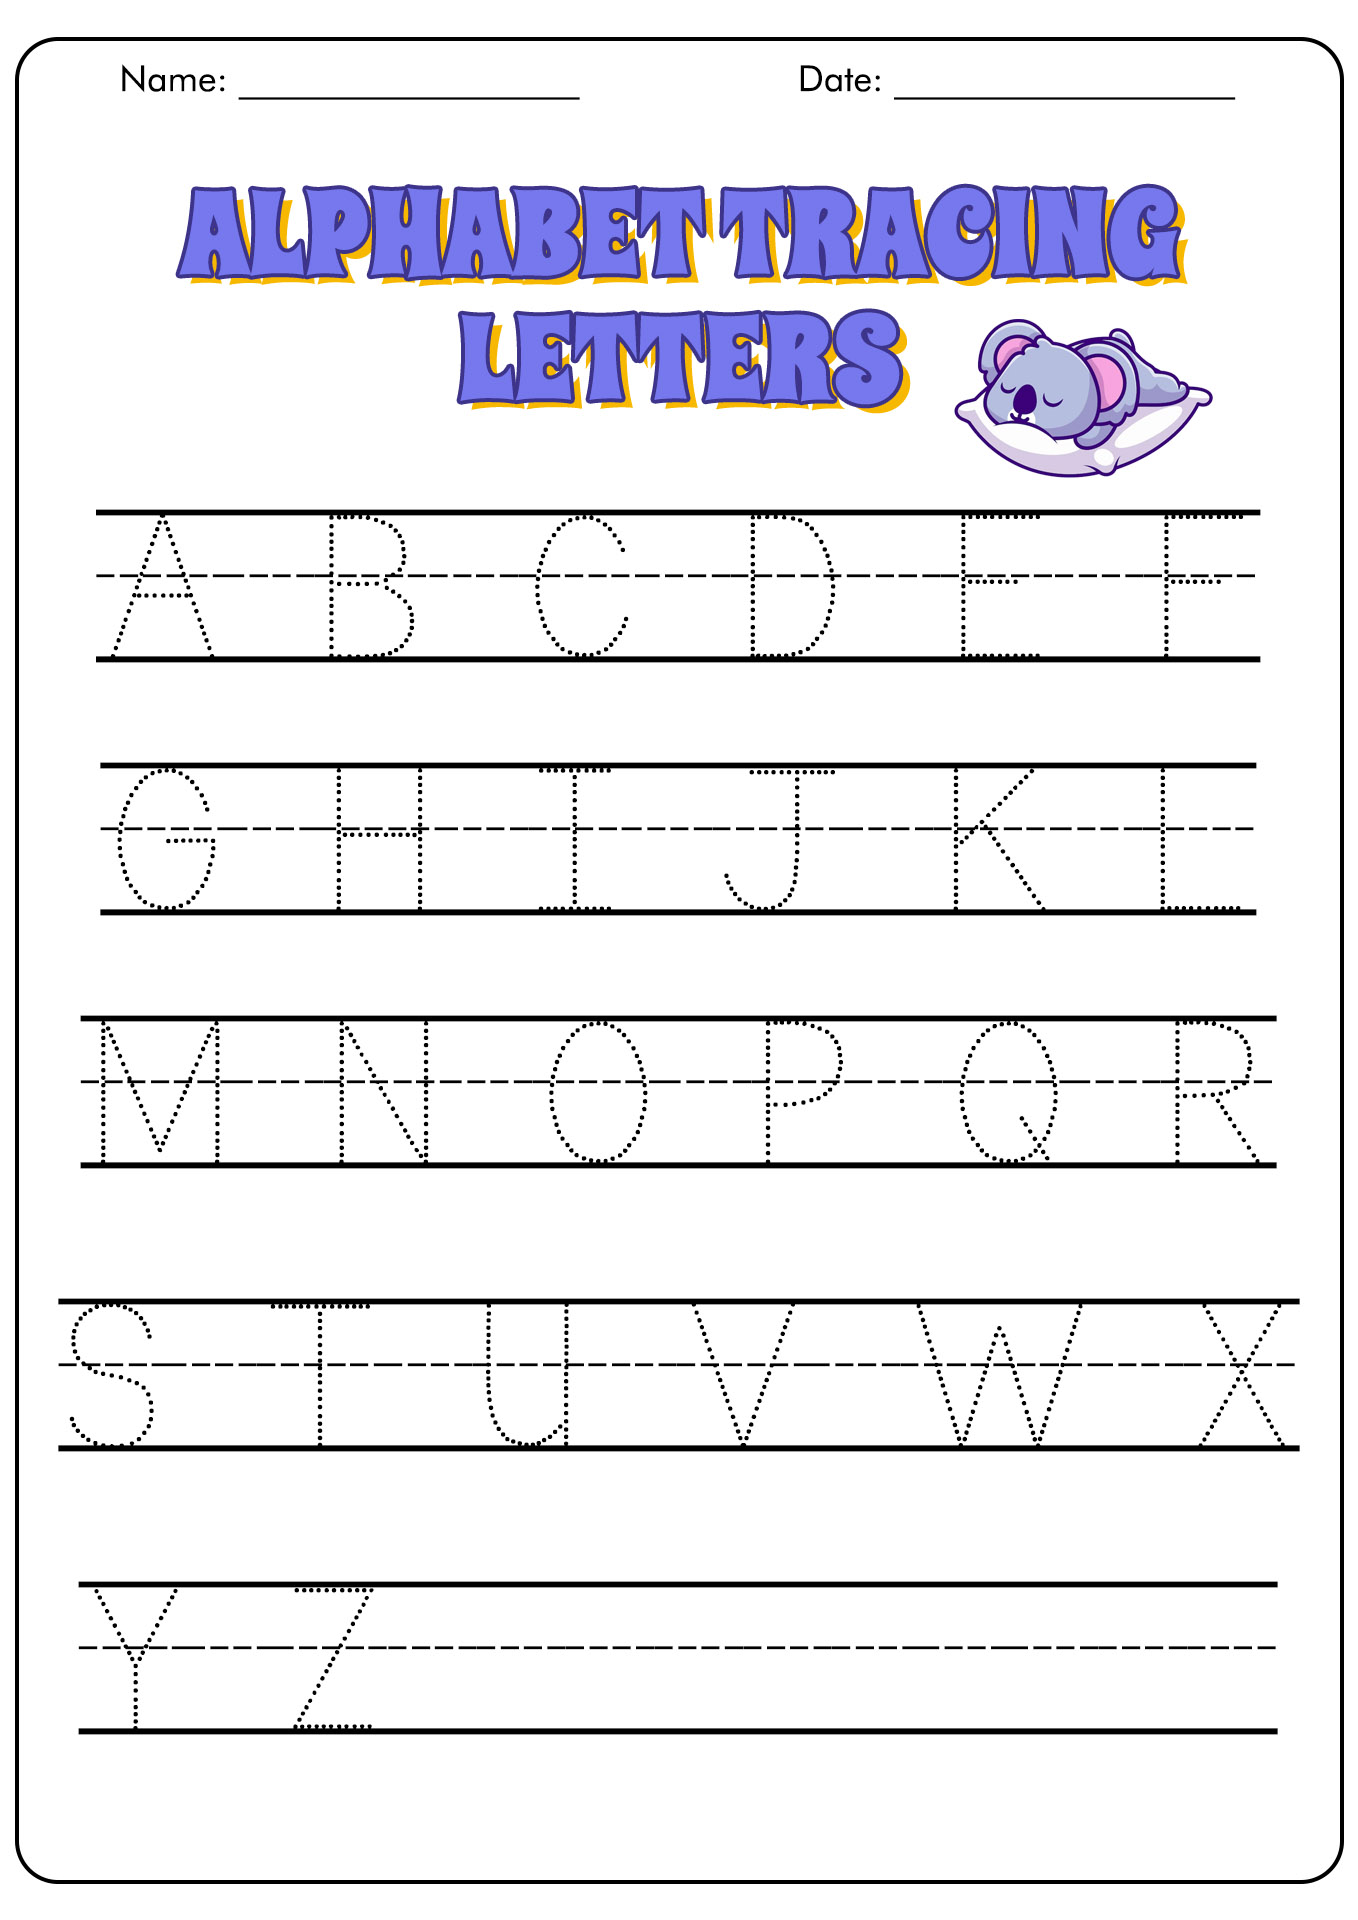 Practice Writing Alphabet Letter Worksheets Image